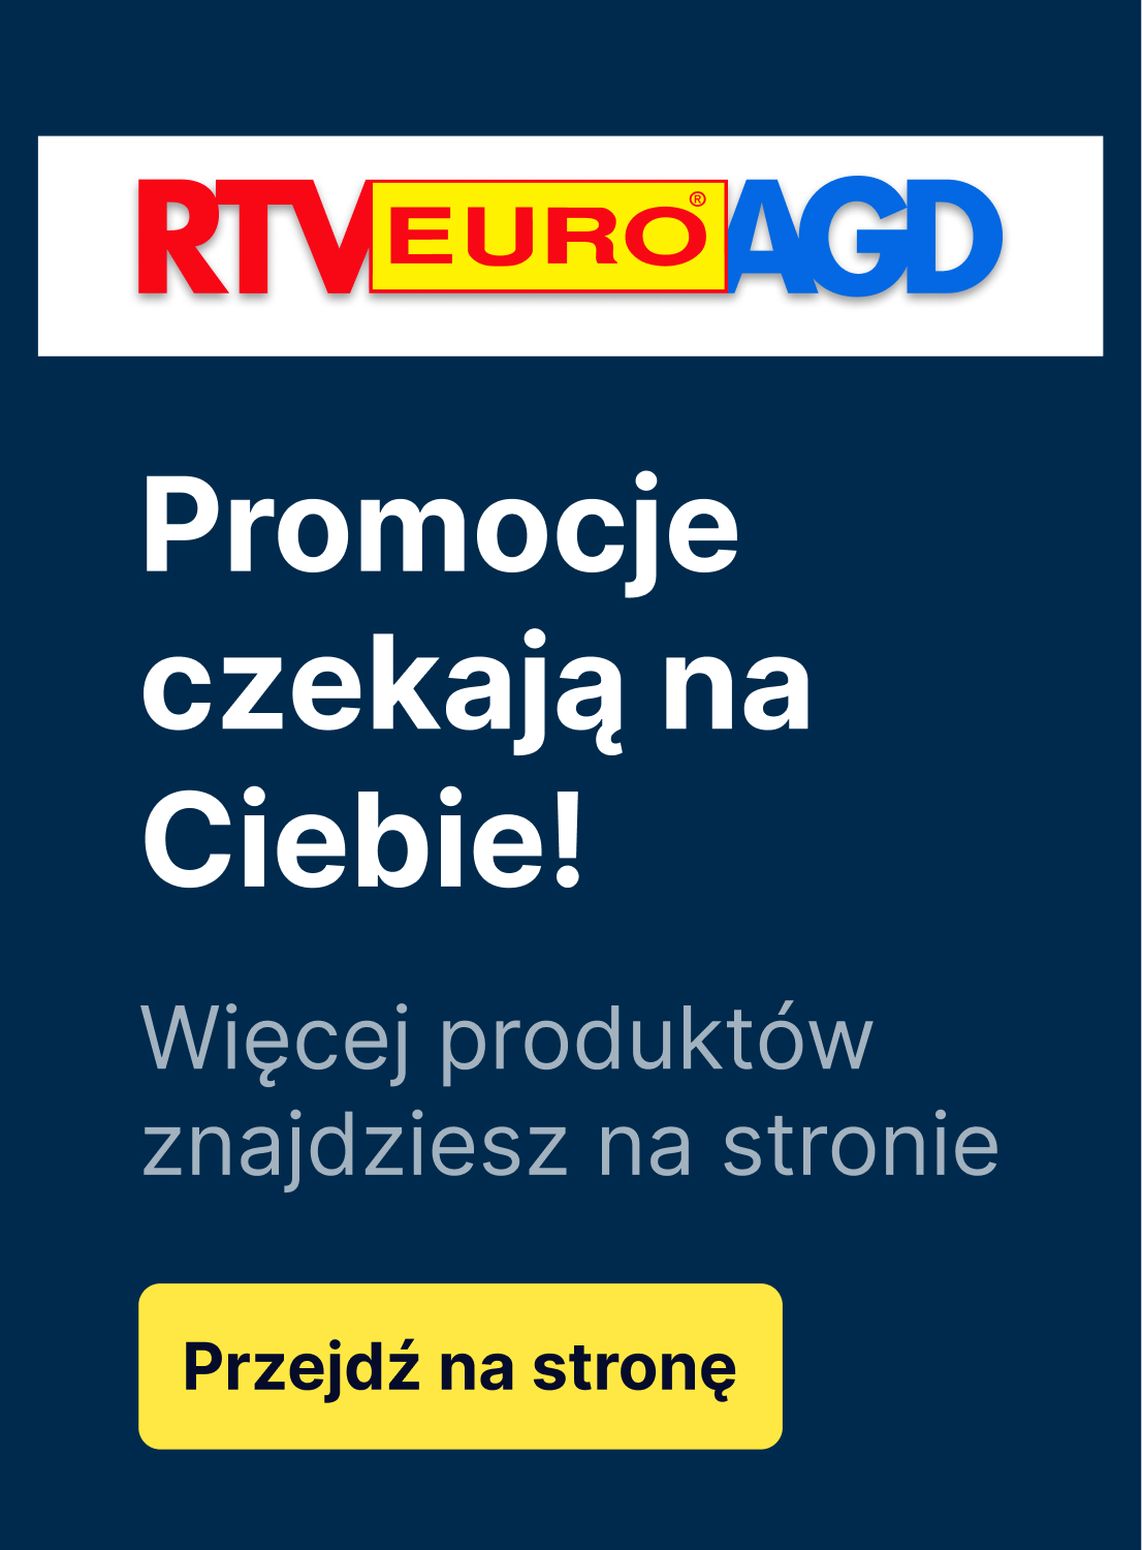 gazetka promocyjna RTV EURO AGD 96h obniżek! - Strona 12